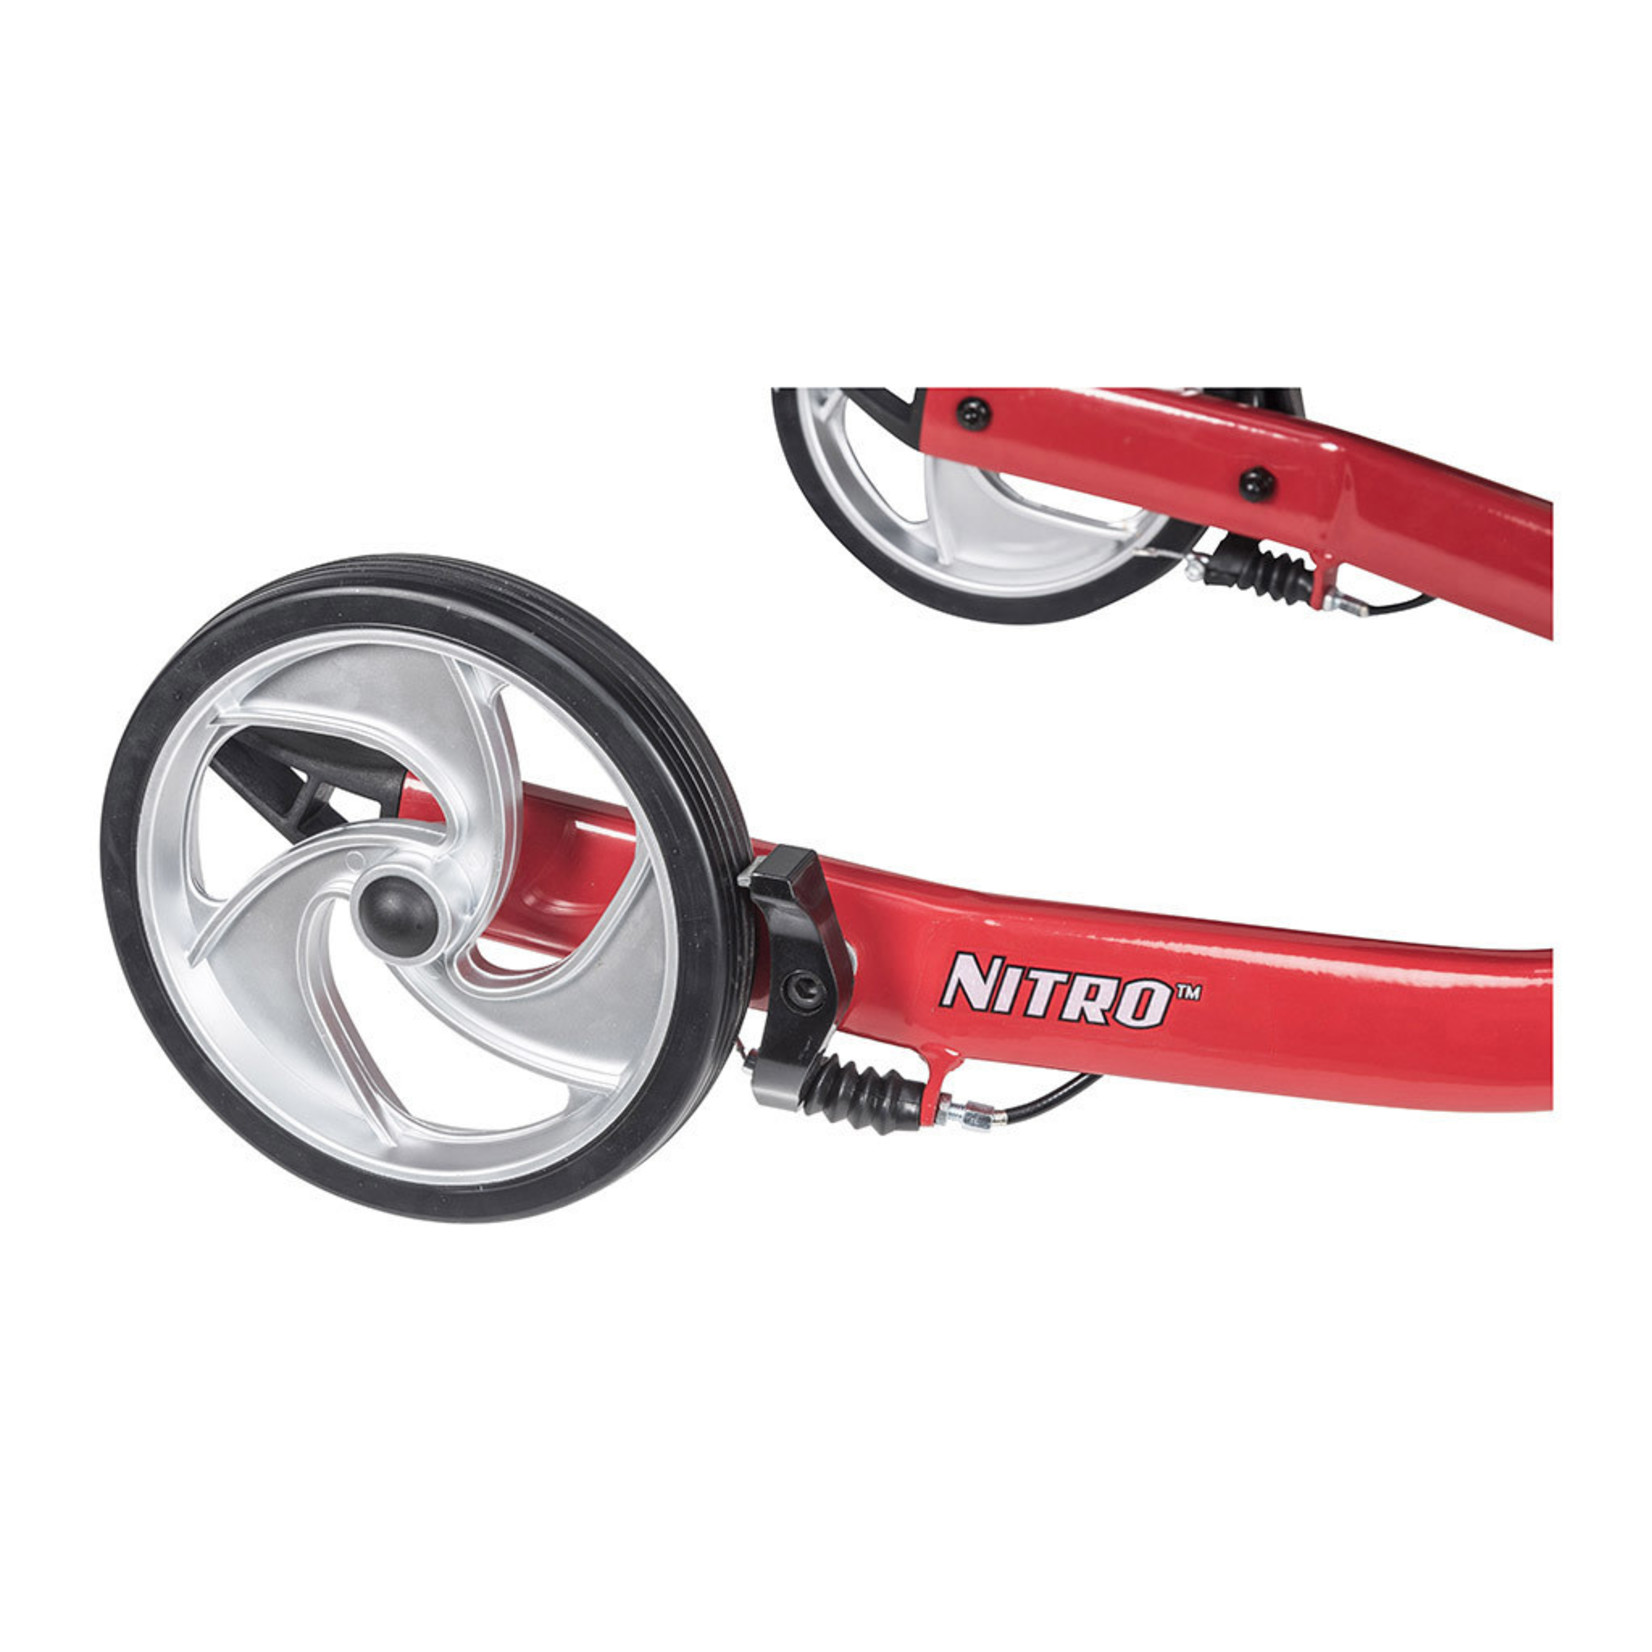 Drive Nitro 3-Wheel Rollator